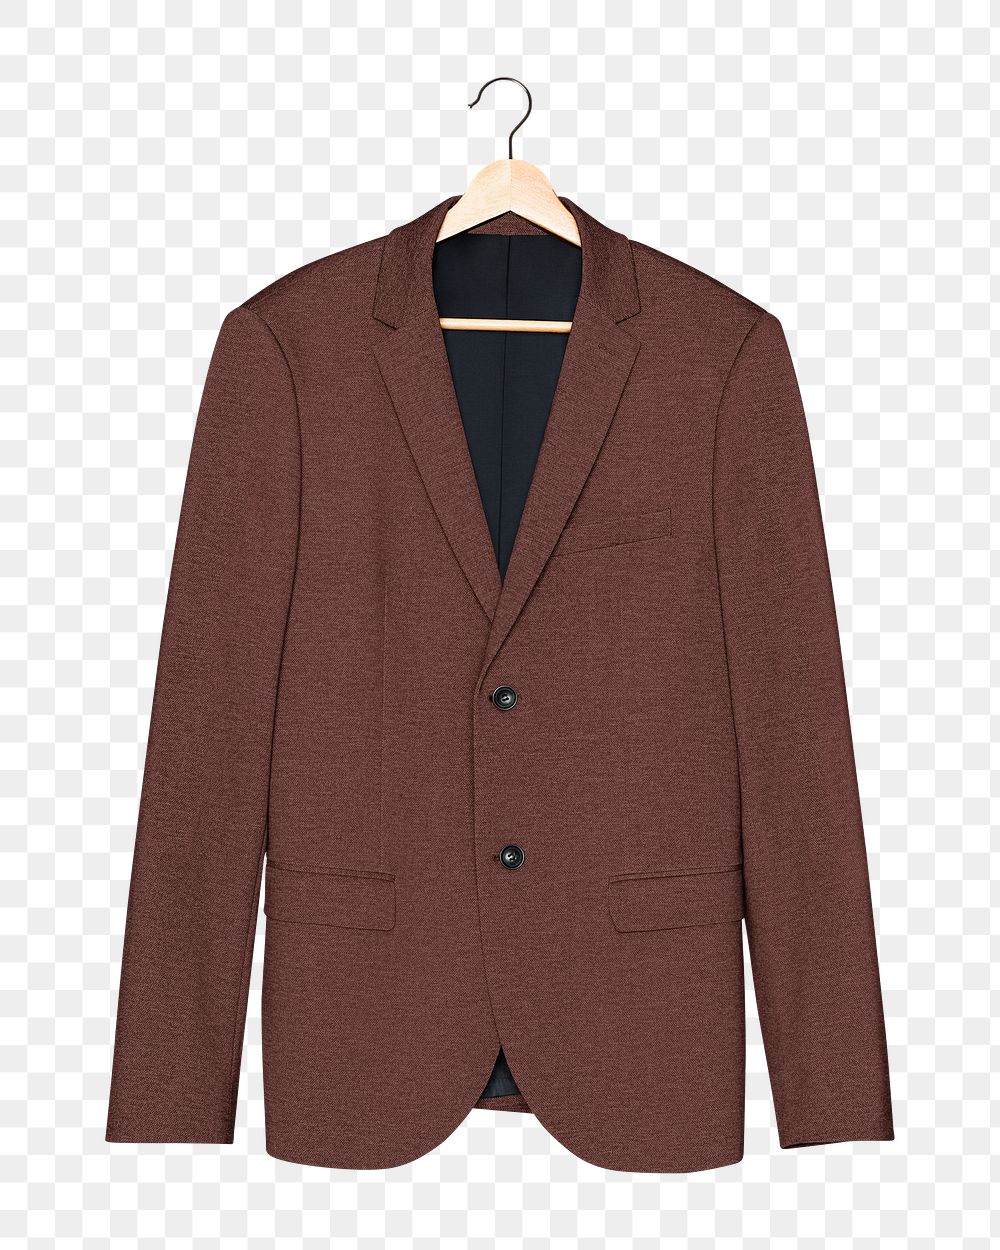 Brown suit png formal apparel, transparent background